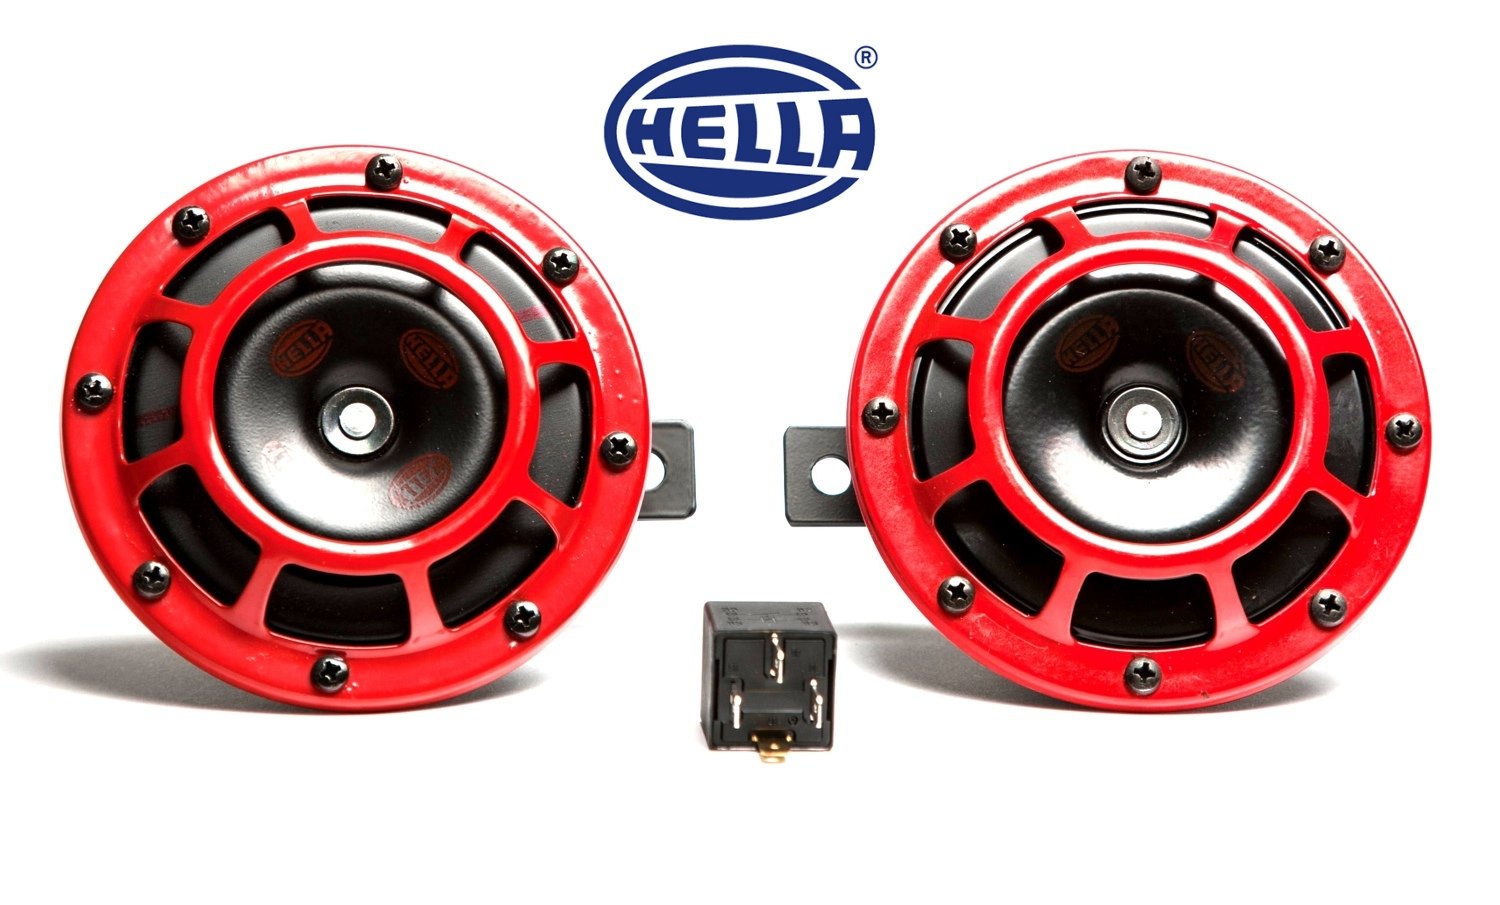 Hella - Supertone Horn Kit 12V 300/500HZ - Pair of 2 - RED - UNIVERSAL - 003399801